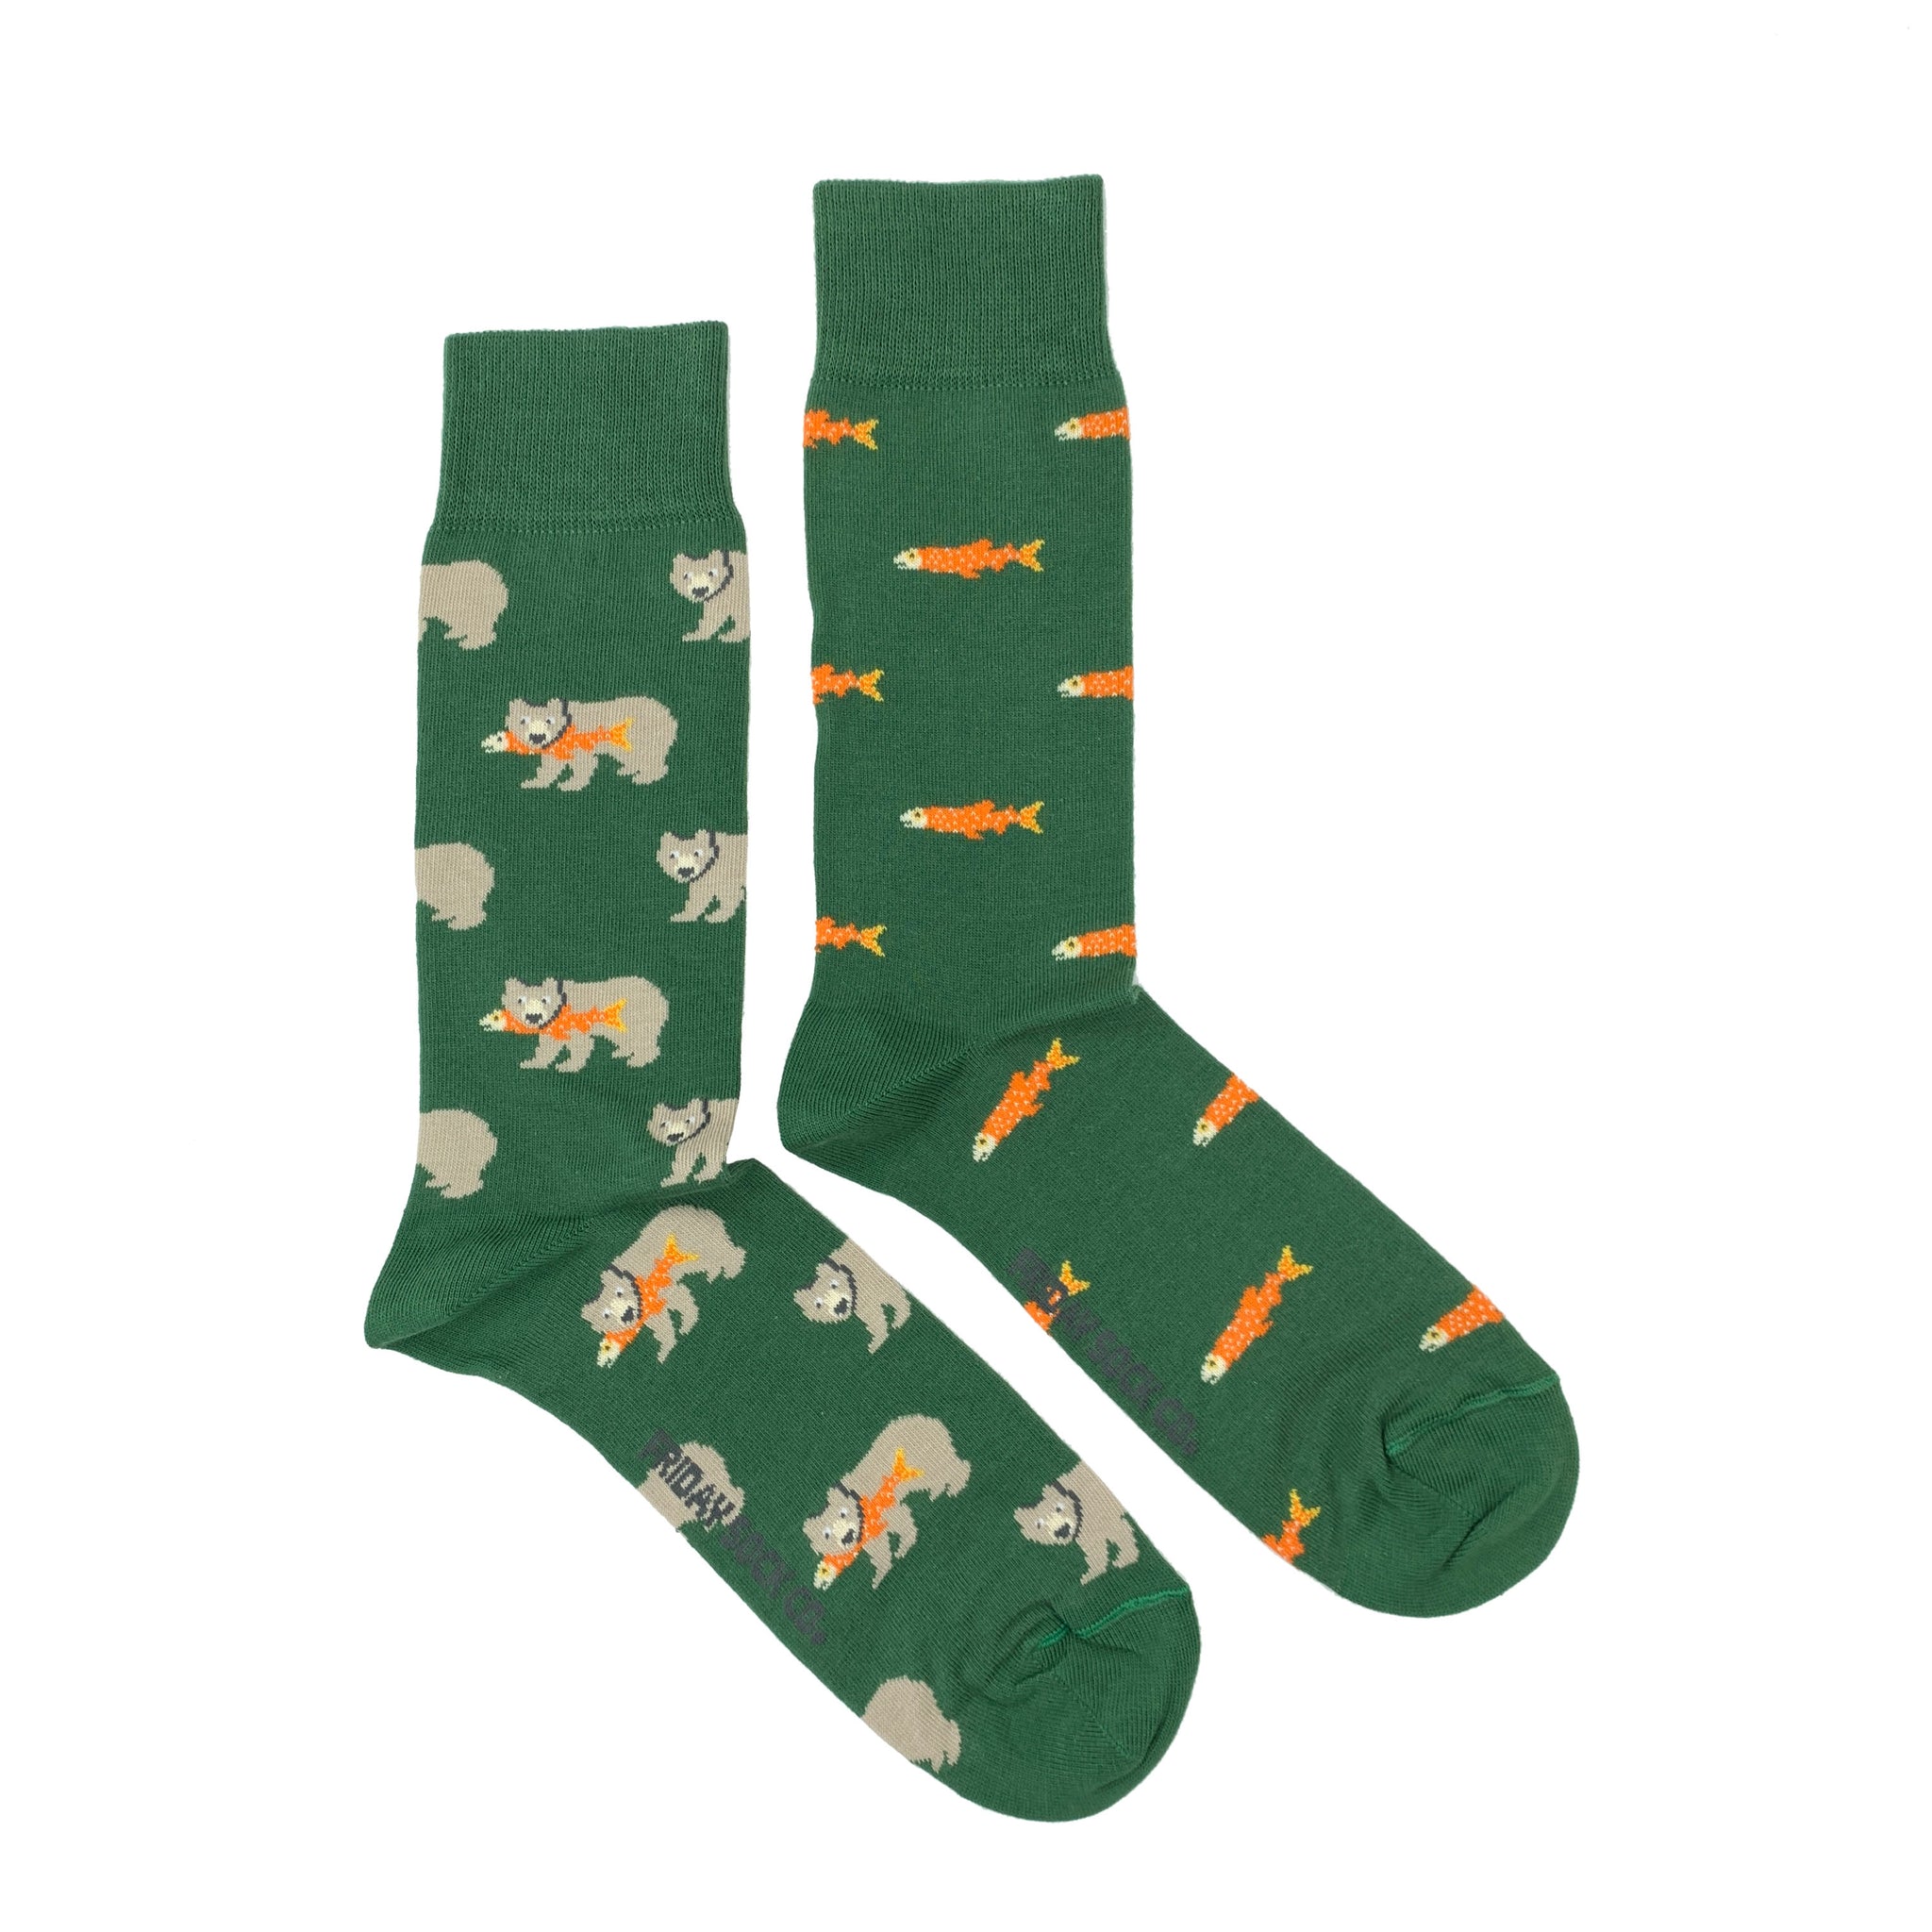 Salmon and Grizzly Bear Mid-Calf Socks